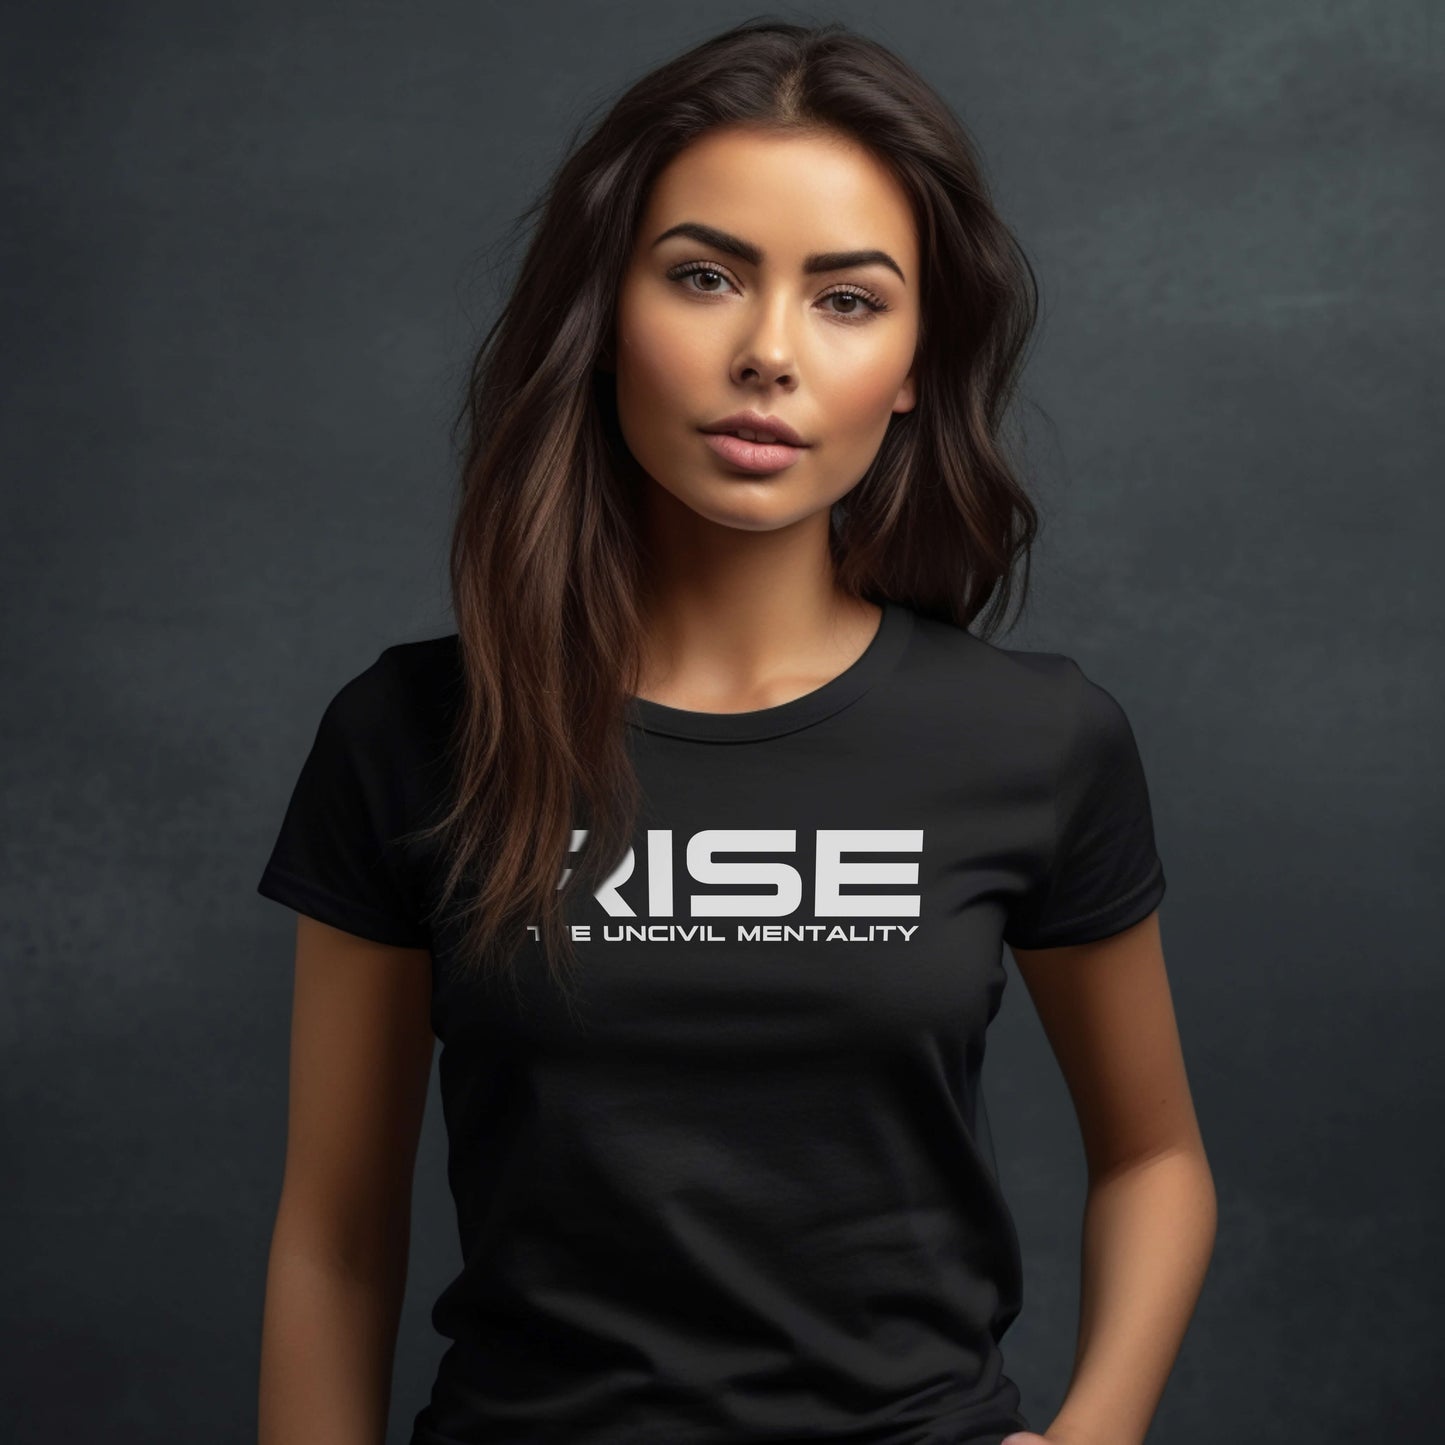 RISE the UNCIVIL Mentality Unisex Lifestyle t-shirt - Black